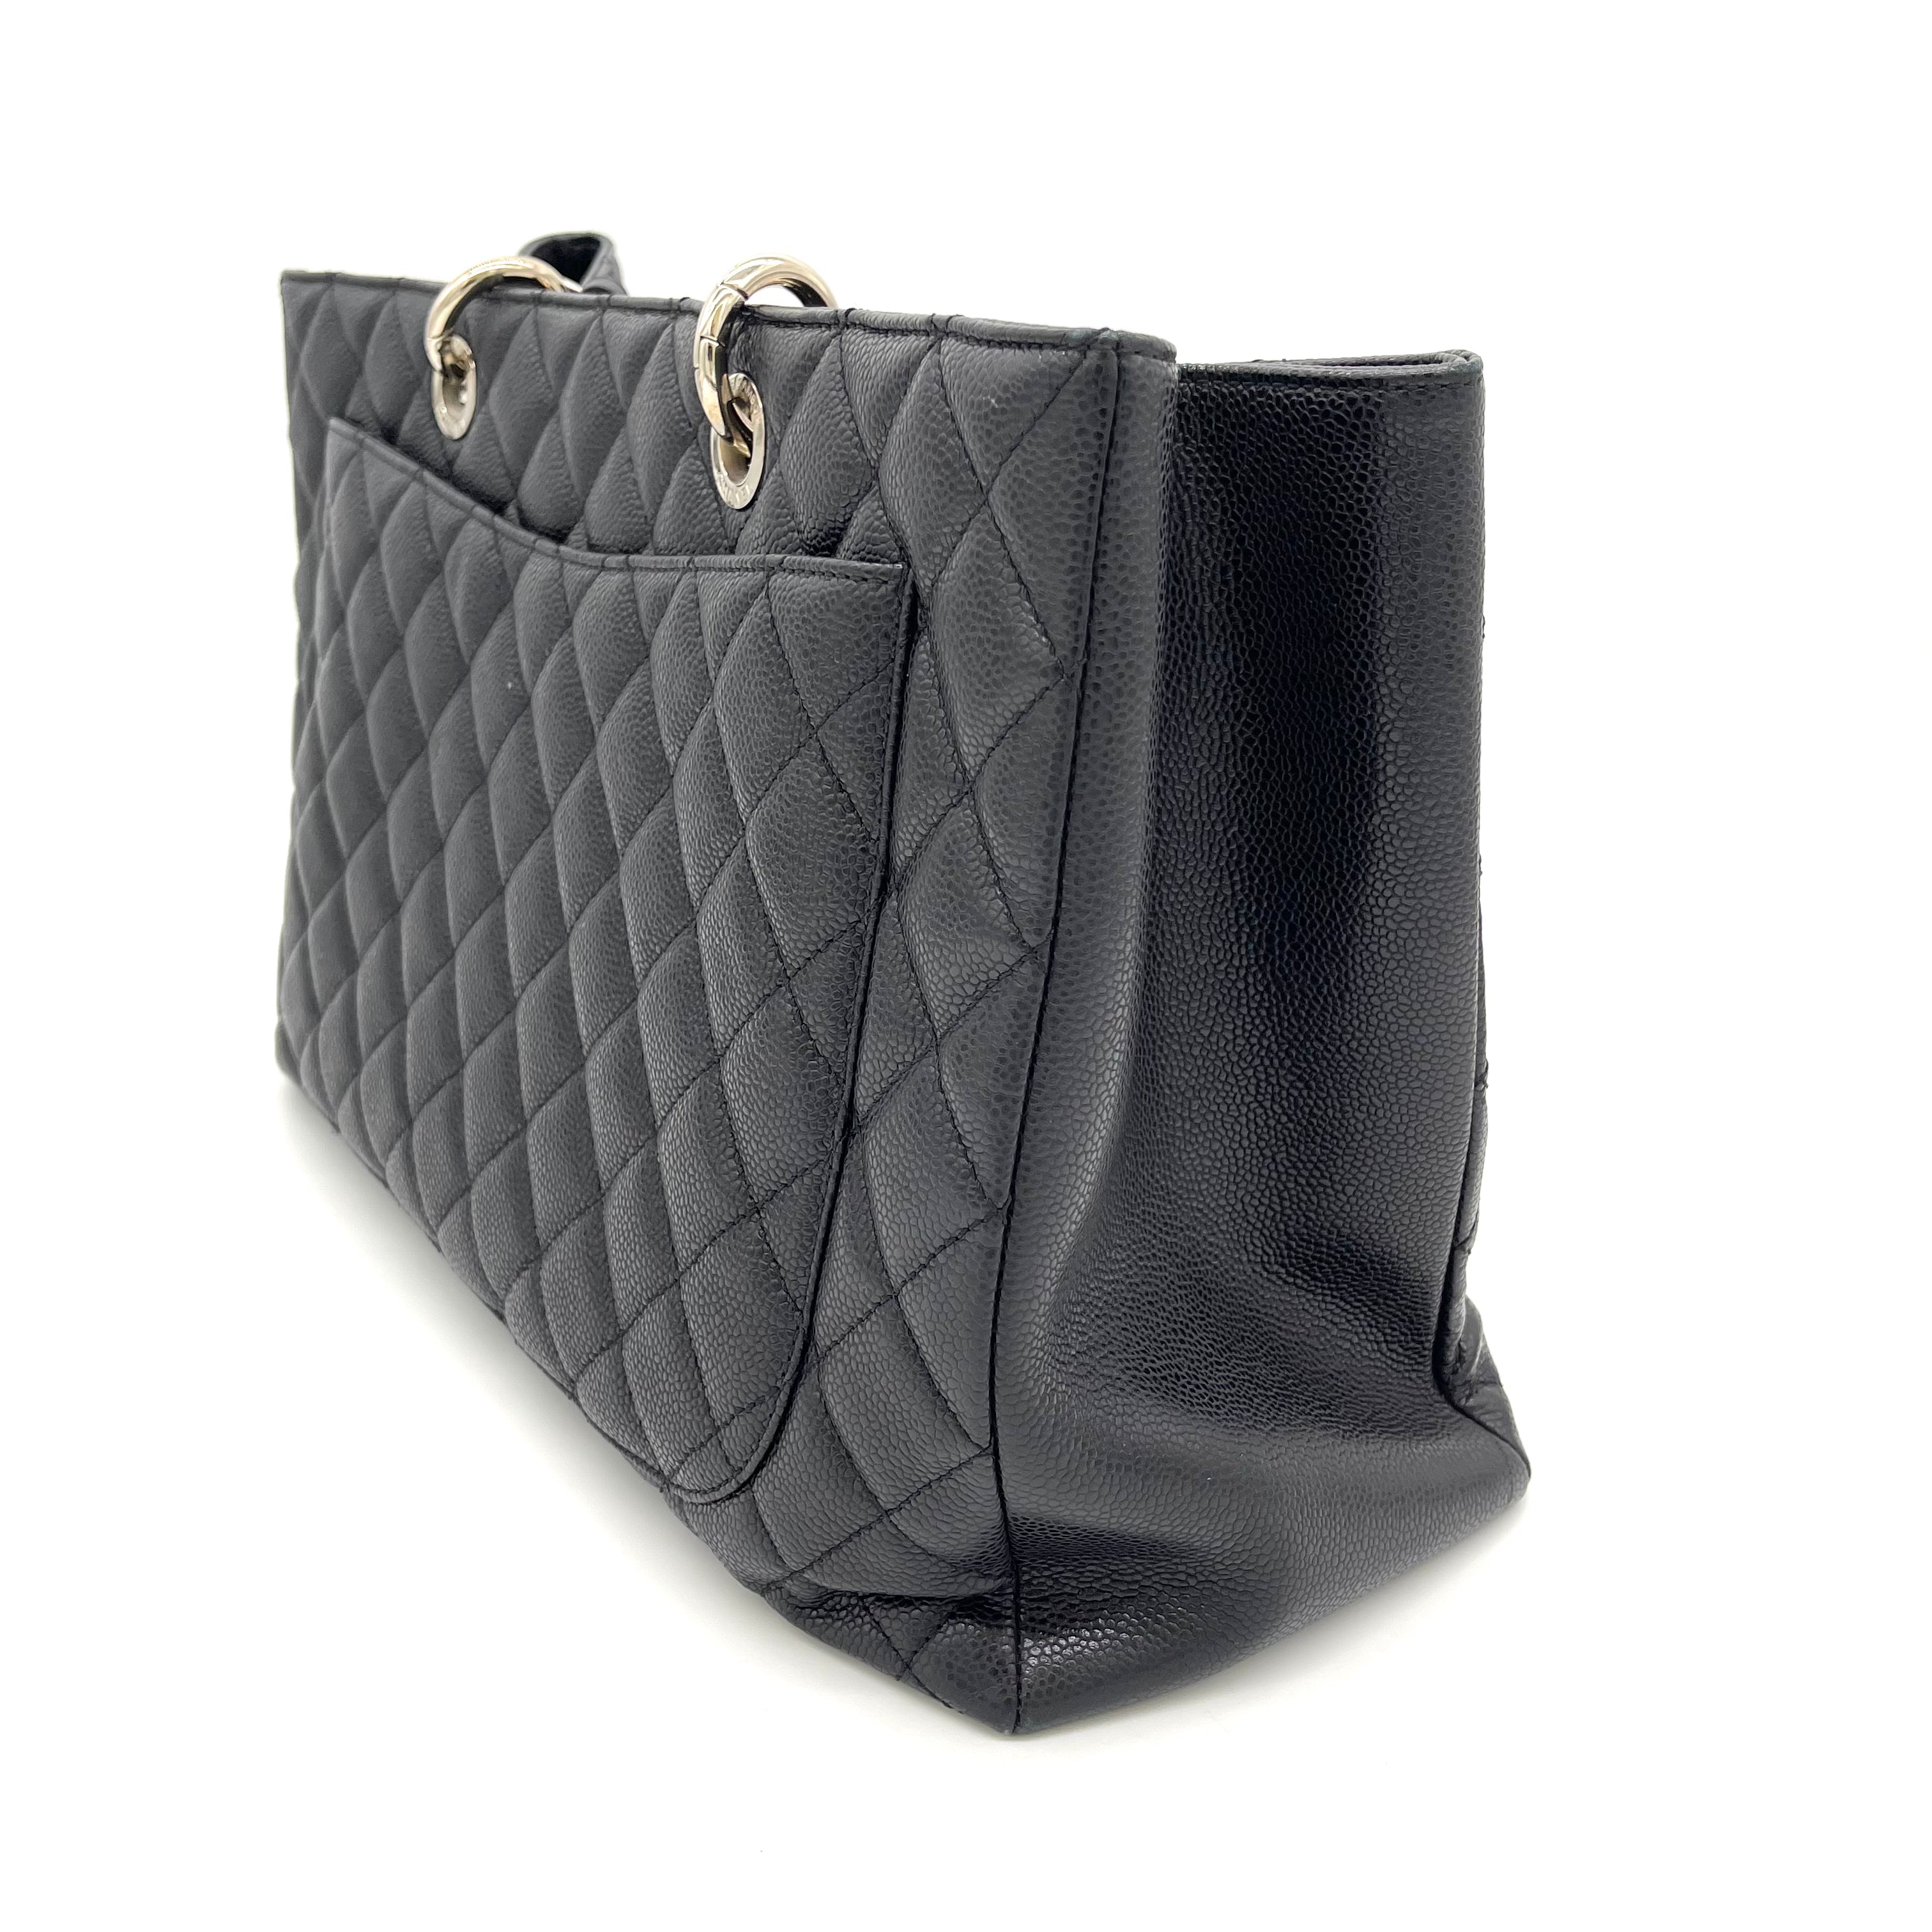 chanel white leather handbag black